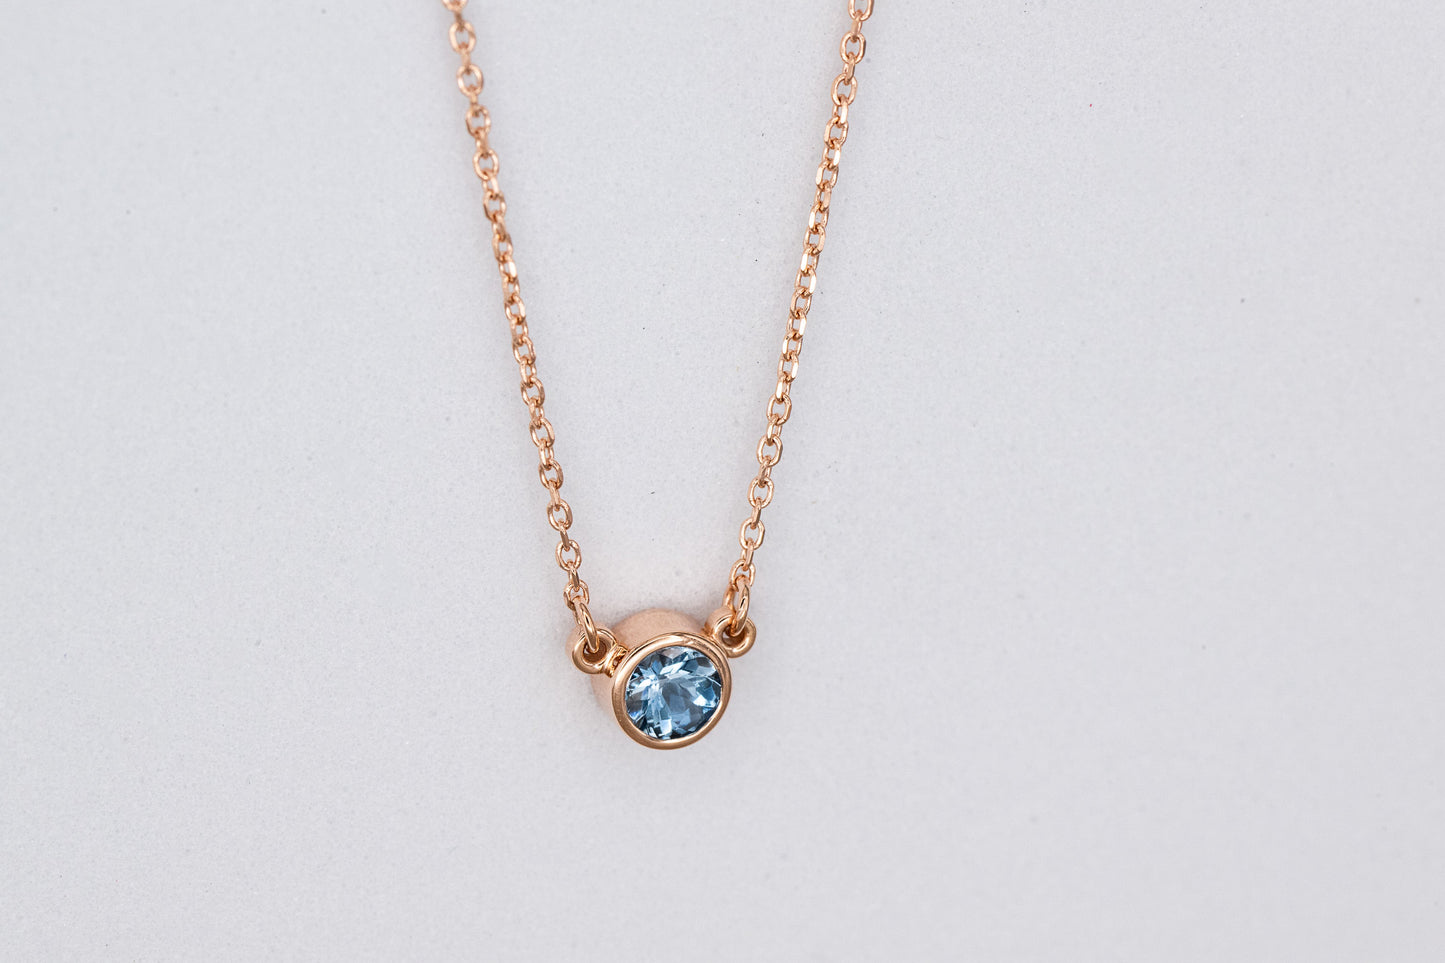 A Cassin handmade Aquamarine Rose Gold Necklace with a blue topaz stone.